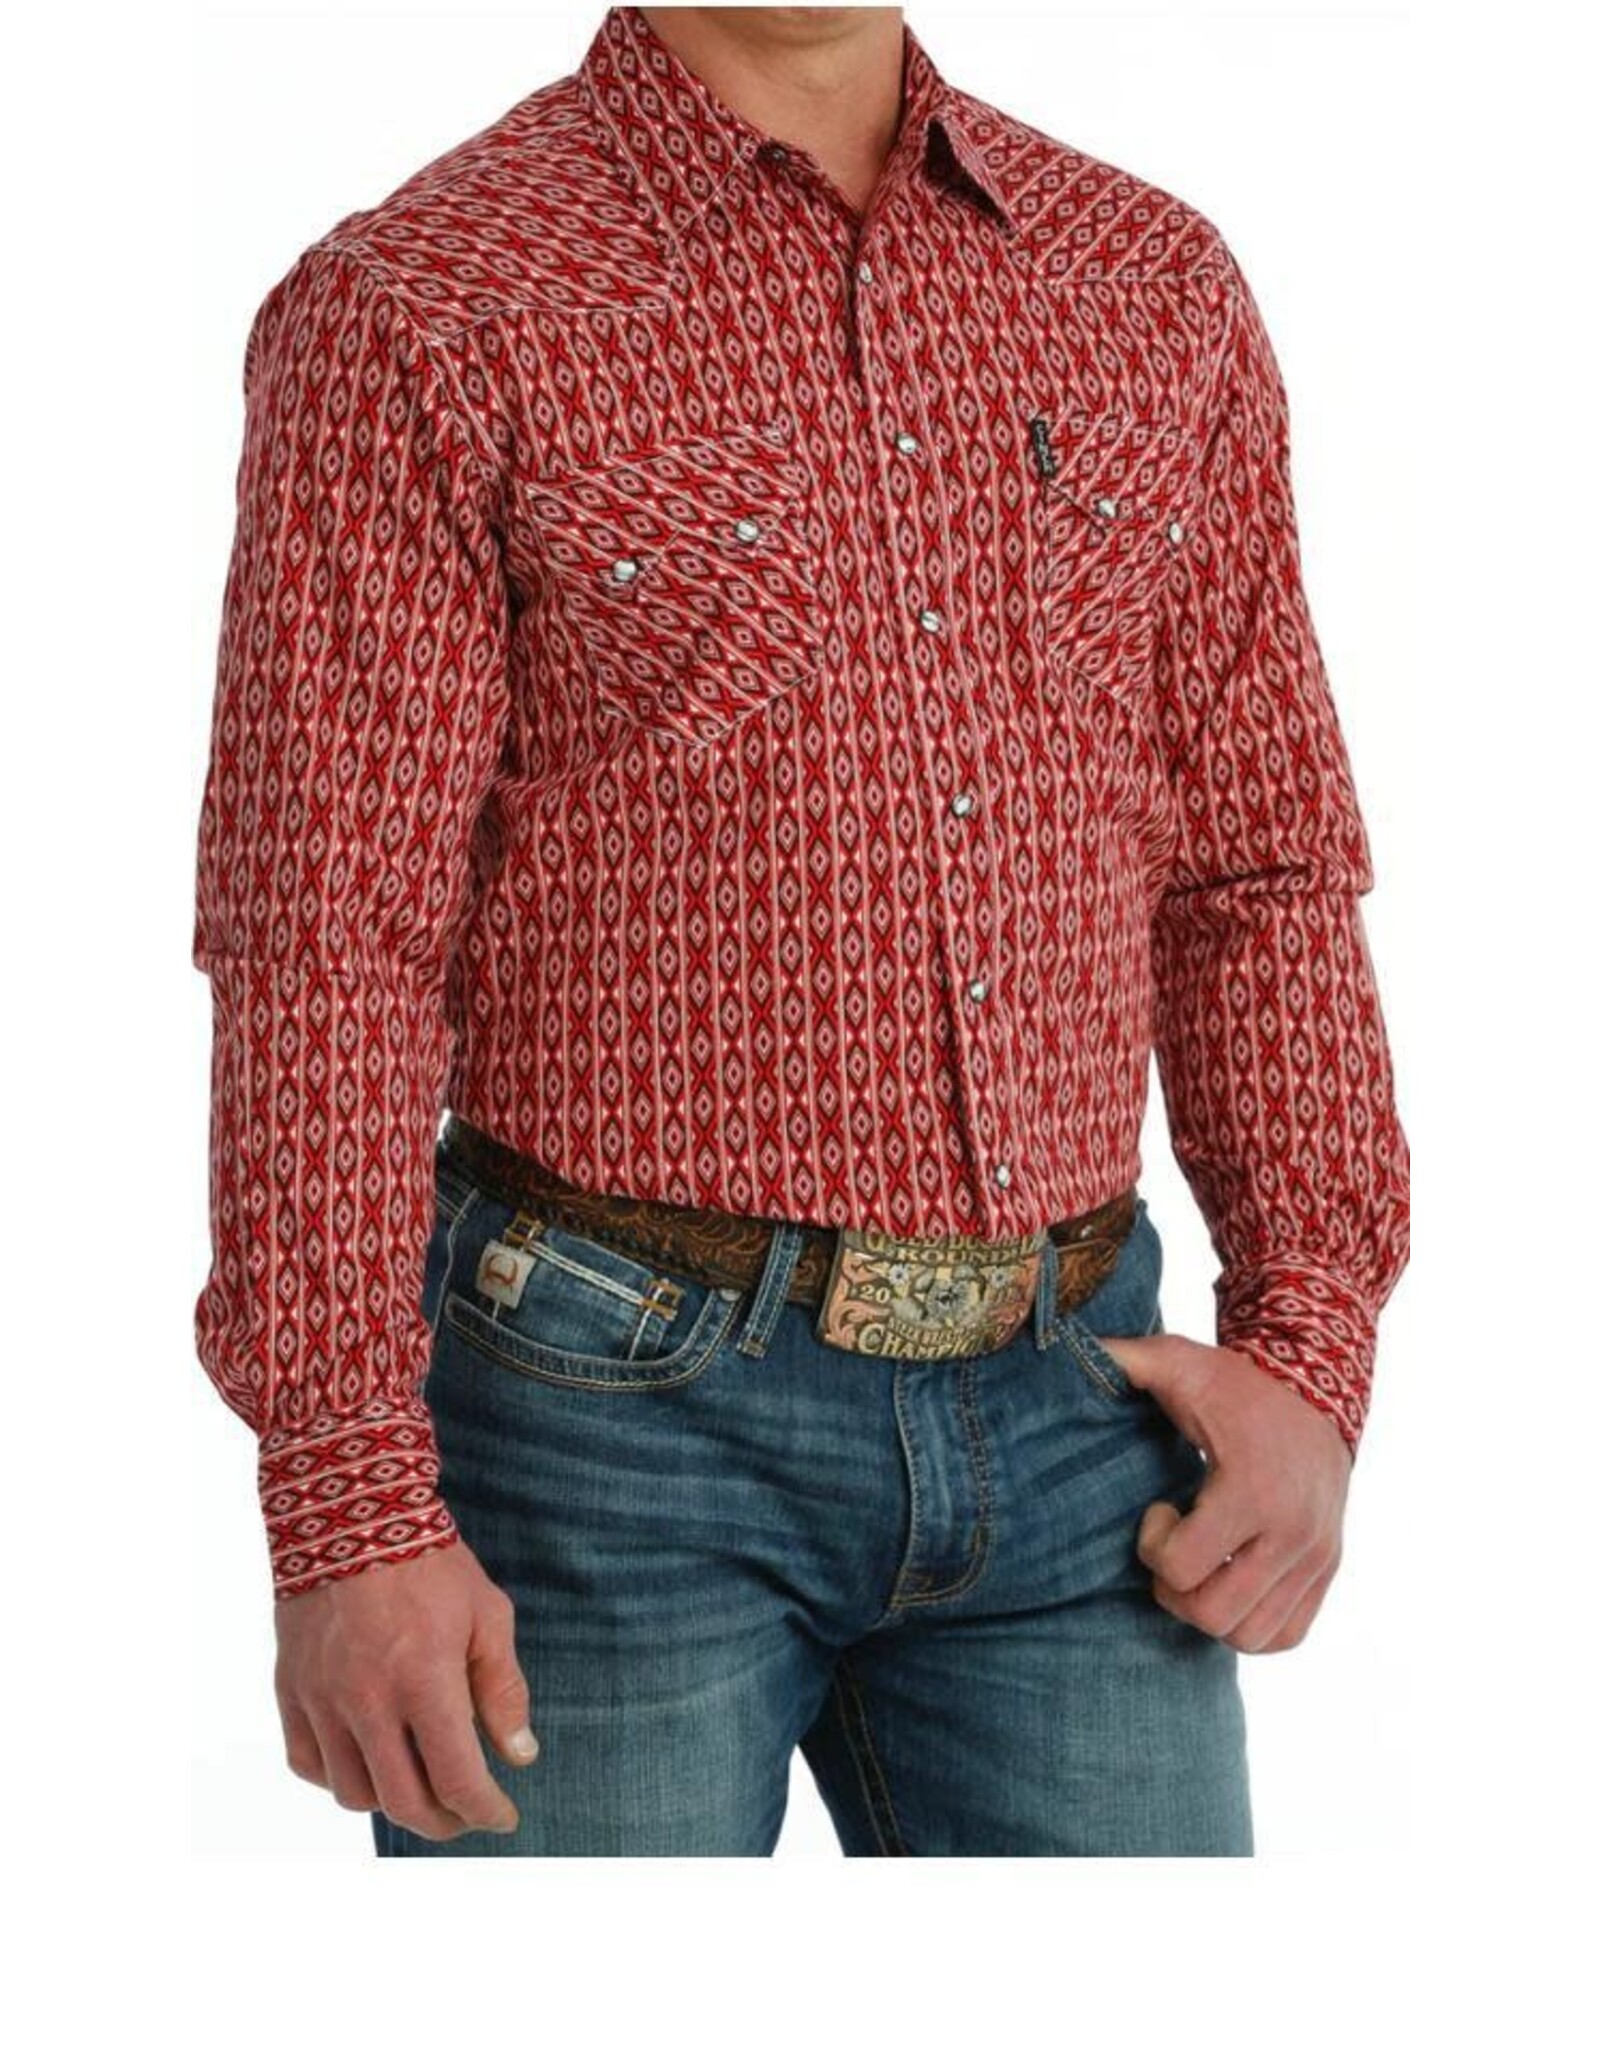 Cinch Men’s Modern Fit Pearl Snap Long Sleeve MTW1301073 RED Western Shirt